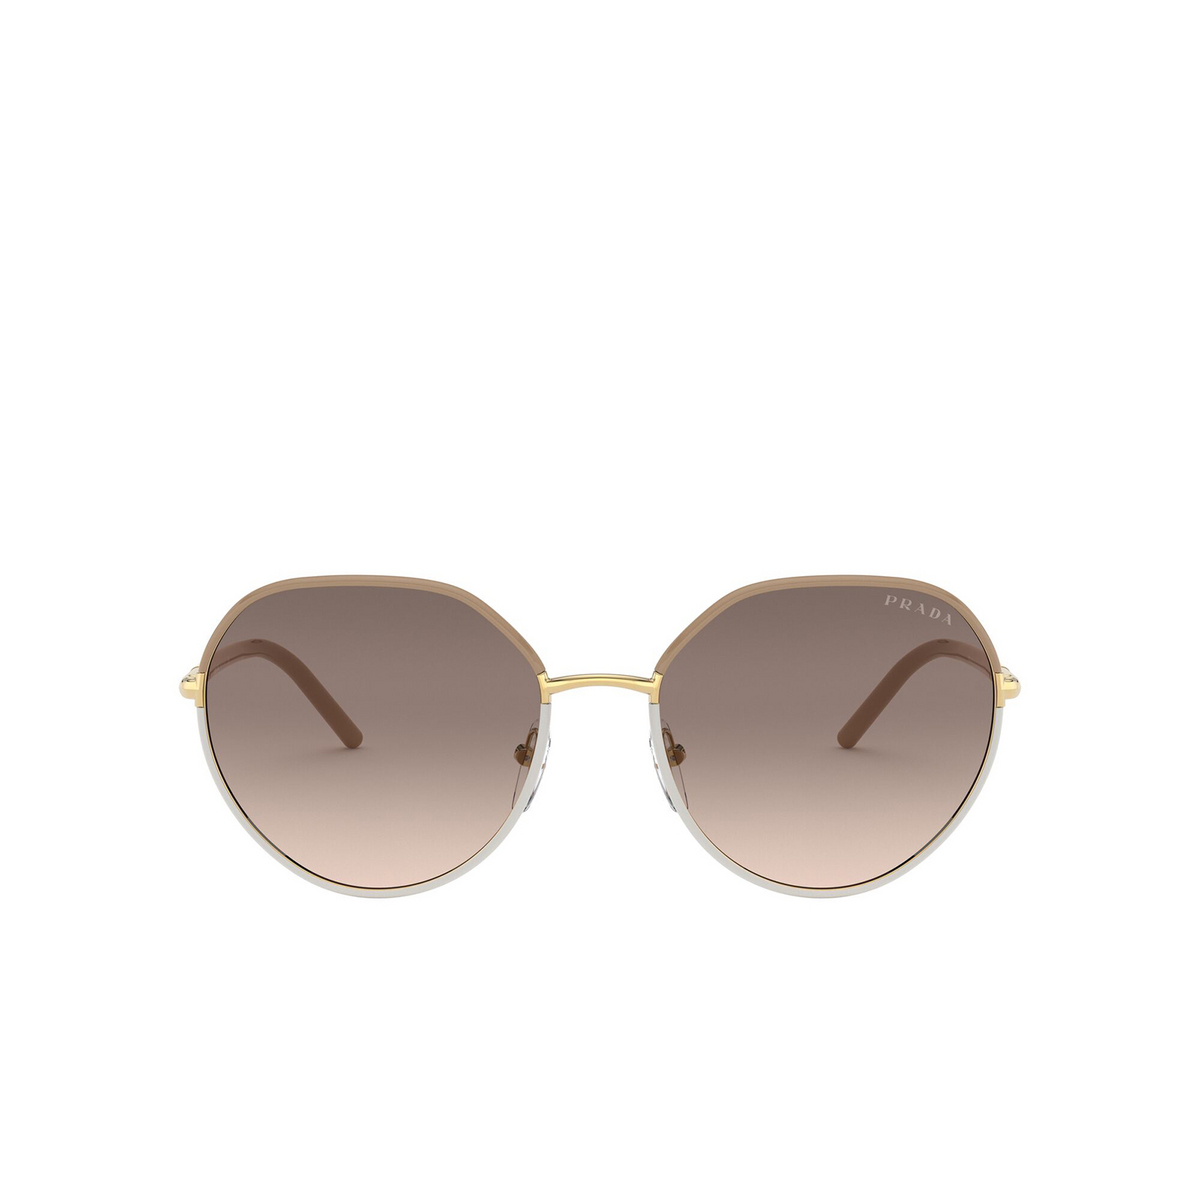 Prada® Round Sunglasses: PR 65XS color Beige / Ivory 09G3D0 - front view.